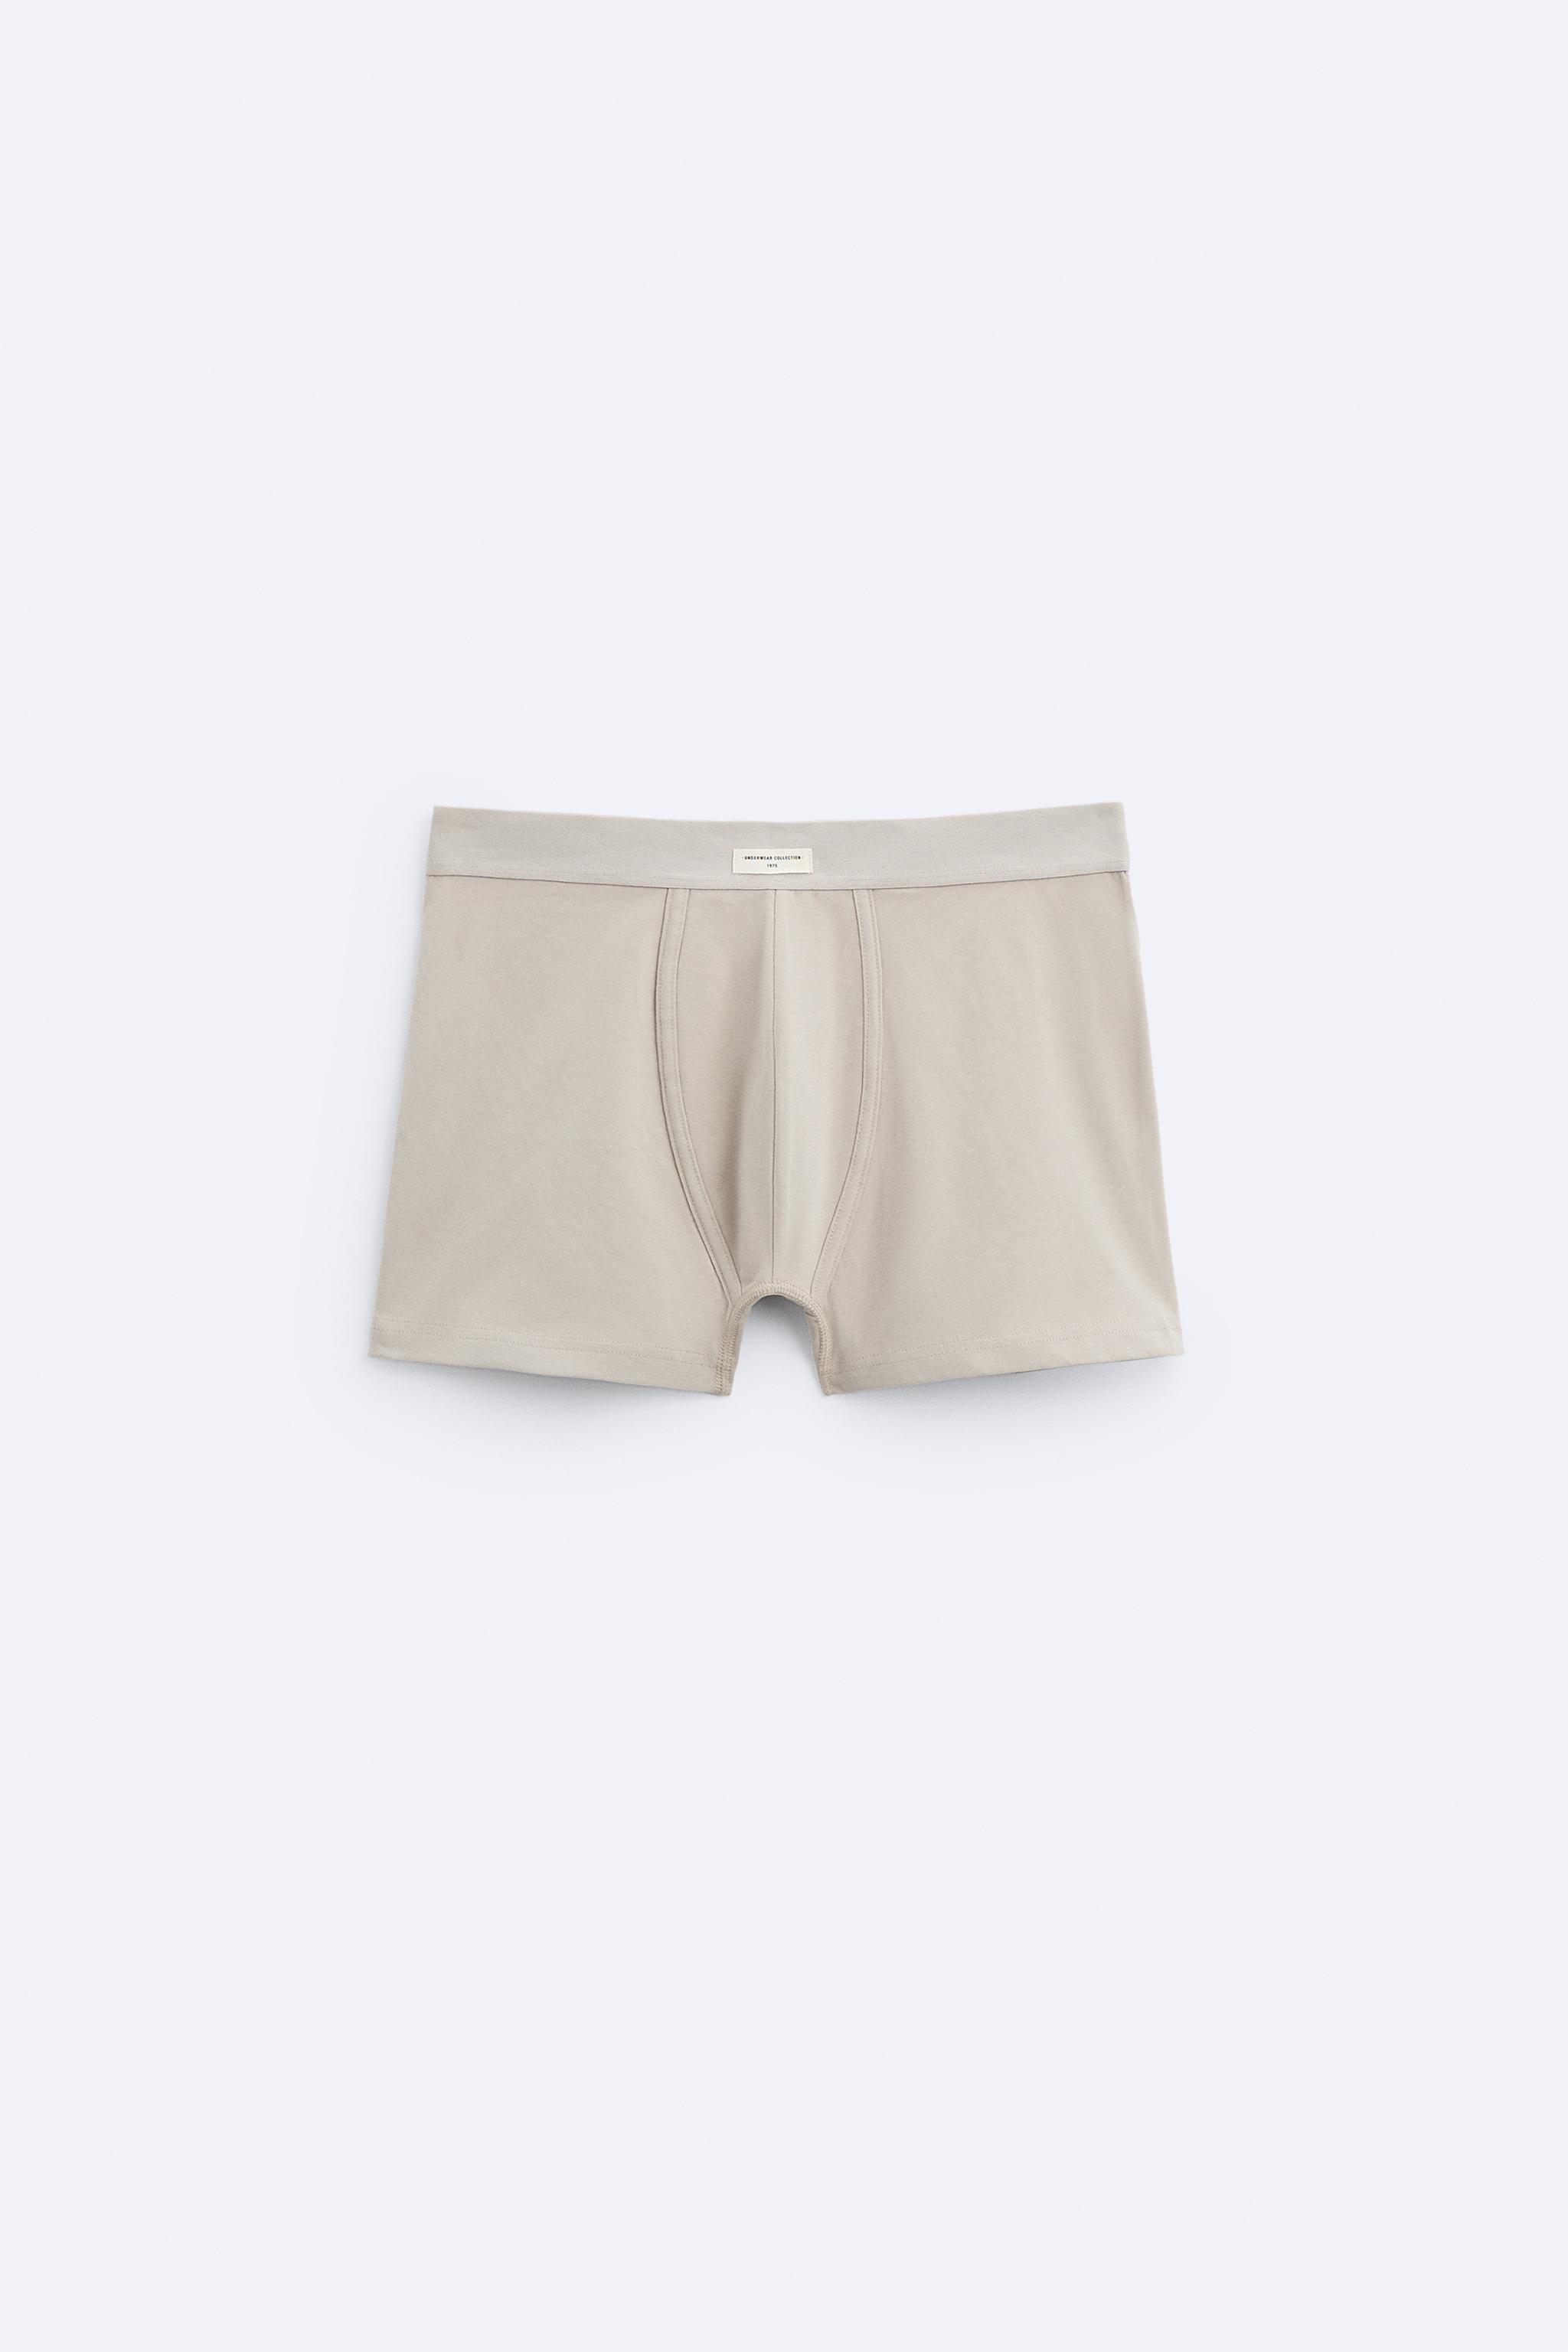 Zara Men's Boxer Shorts